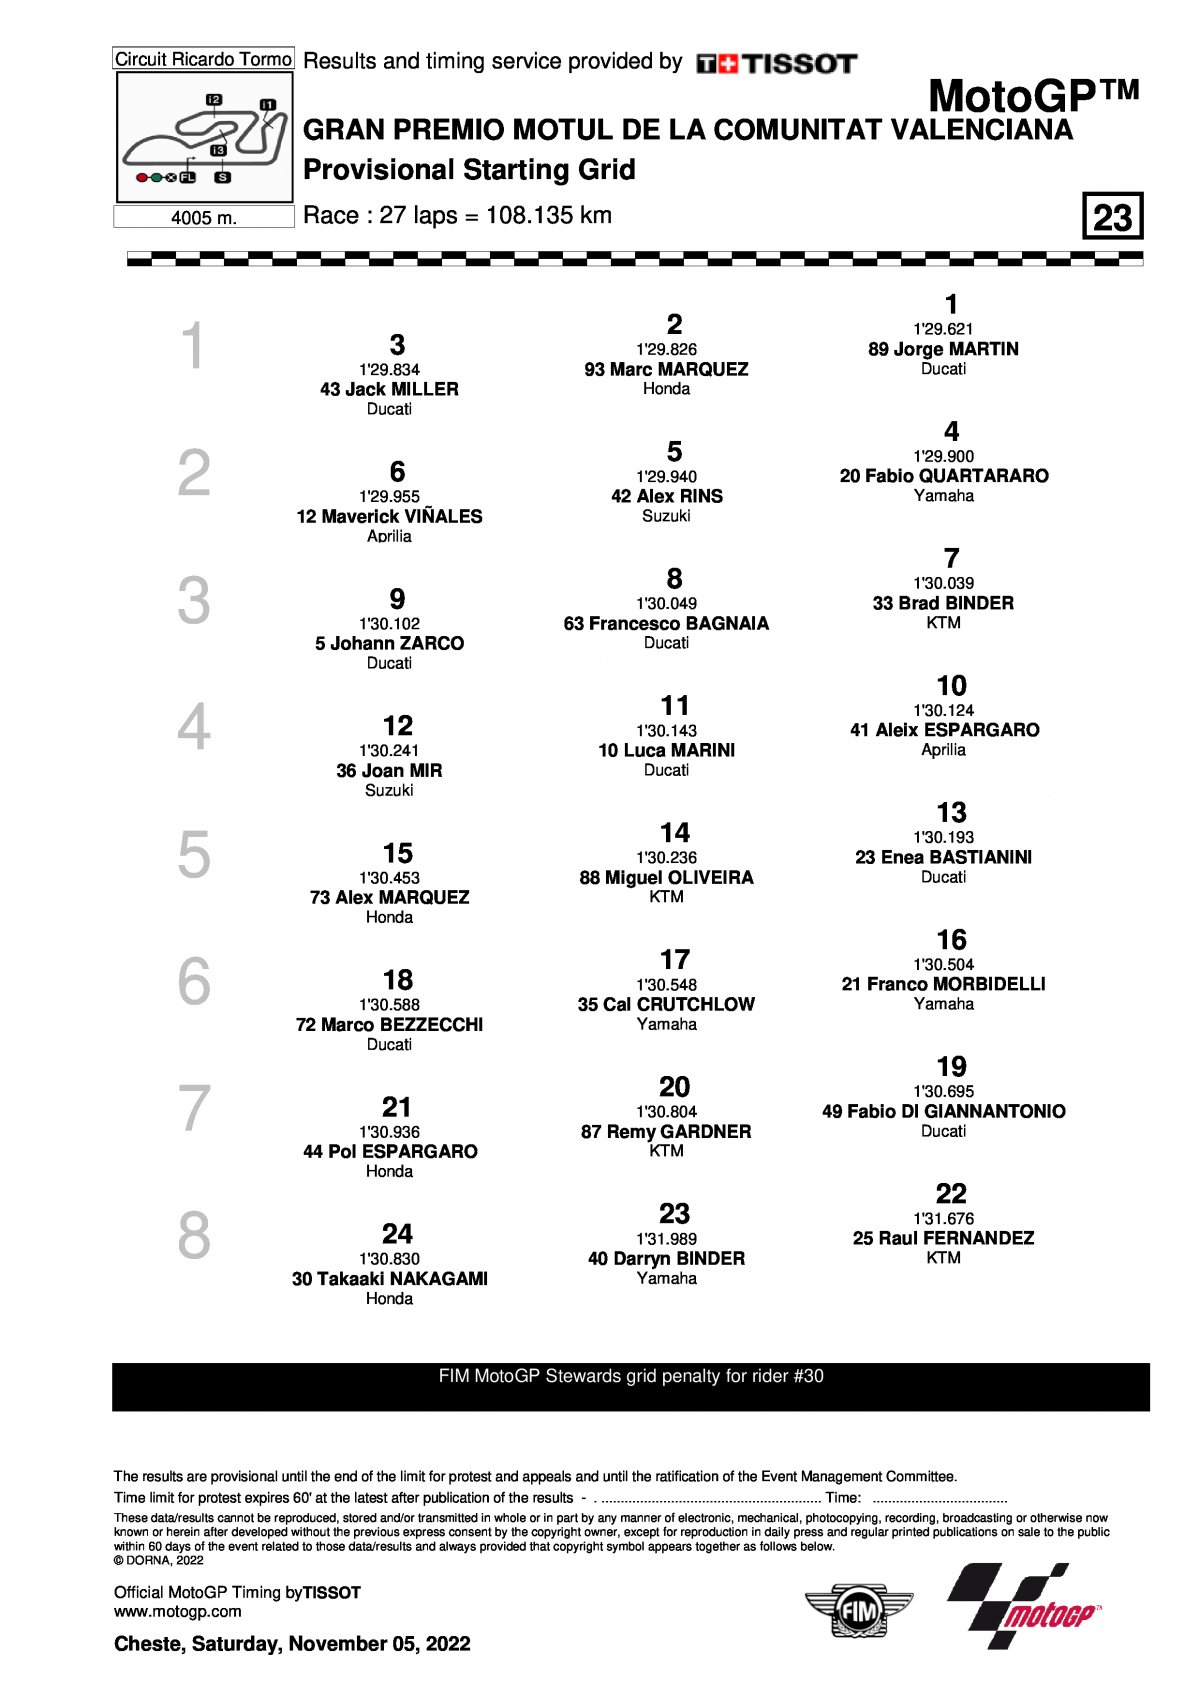 Стартовая решетка Гран-При Валенсии MotoGP (6/11/2022)